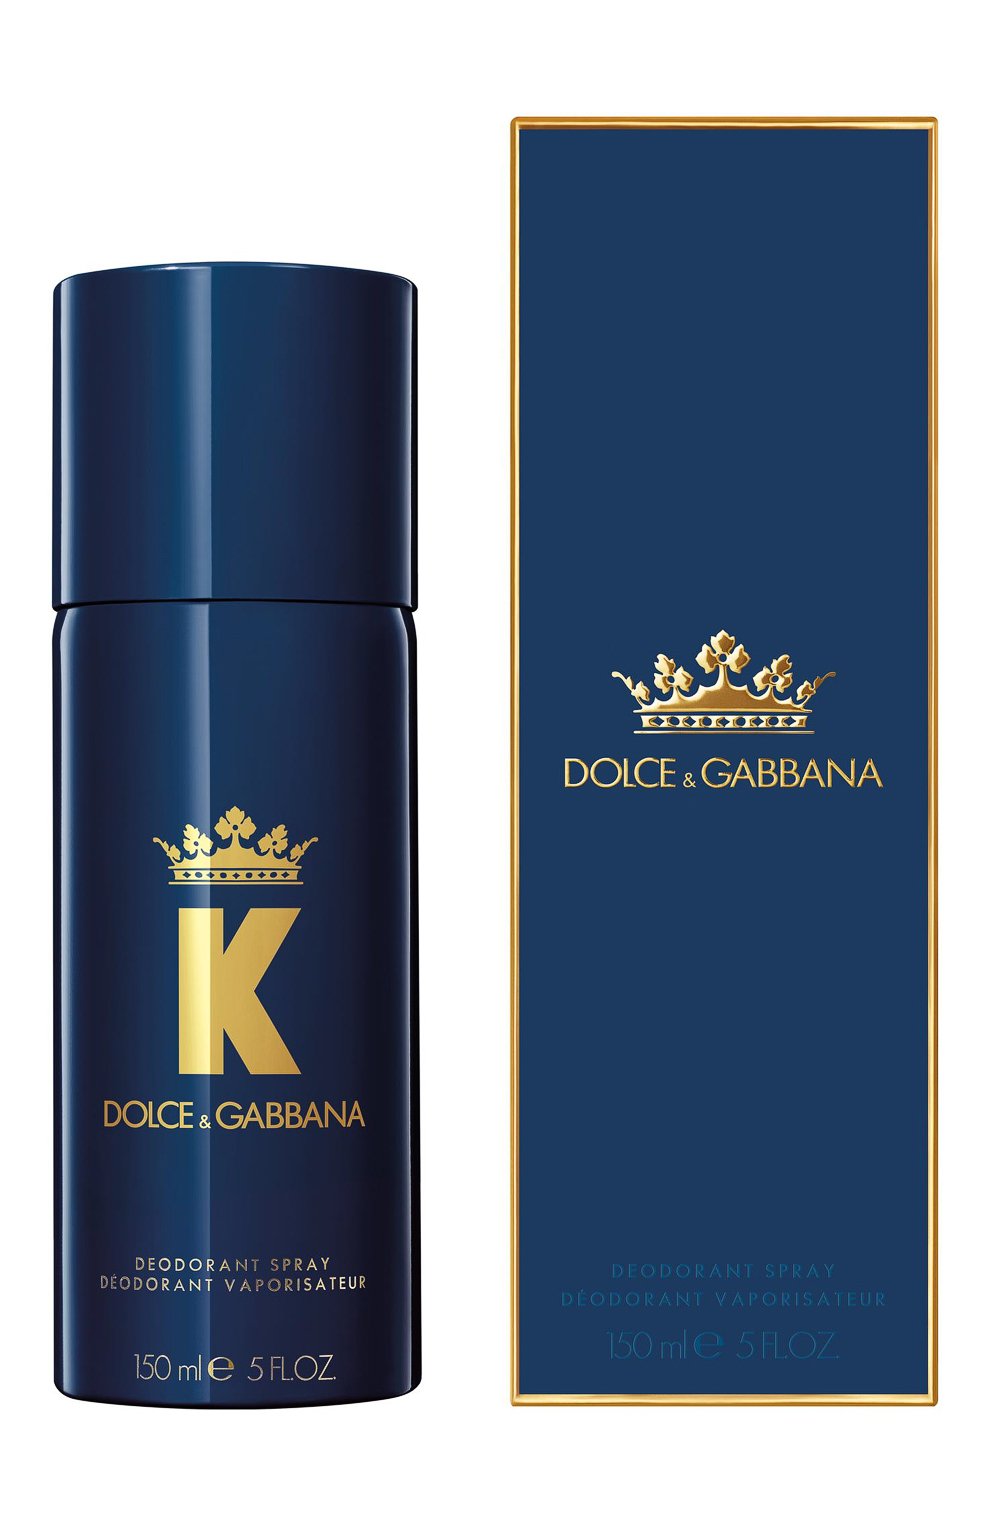 K by dolce gabbana. K by Dolce & Gabbana deo-Spray (150 мл). Дезодорант мужской Dolce Gabbana k. Дезодорант спрей Дольче Габбана мужской. Дезодорант Dolce Gabbana мужской.